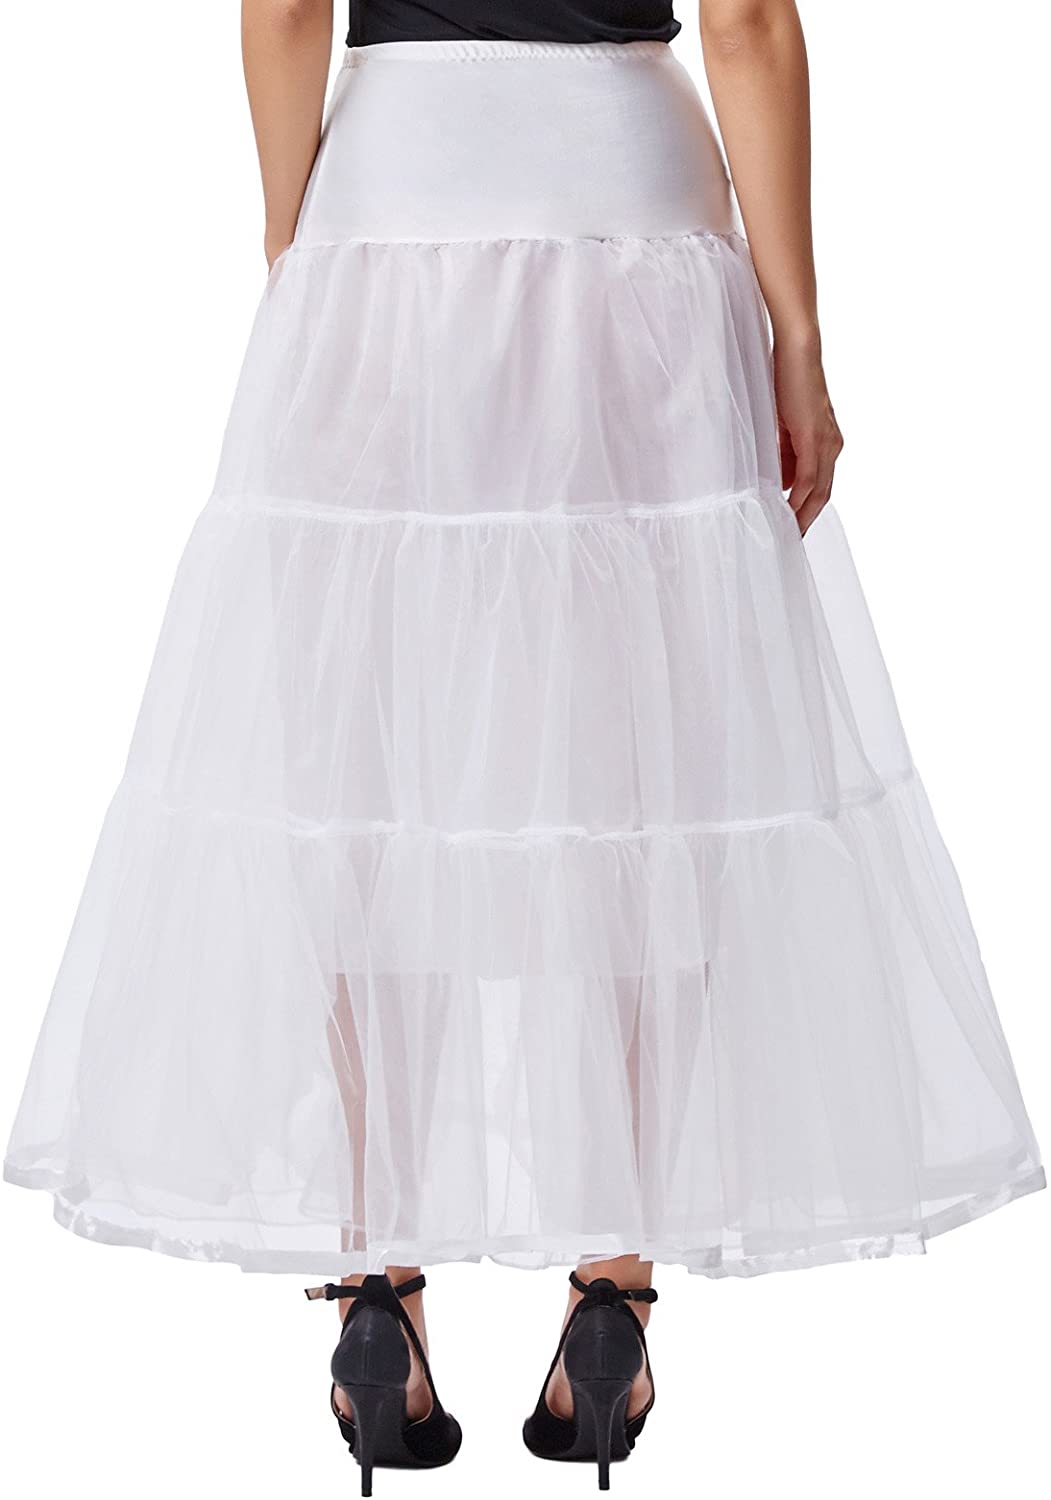 GRACE KARIN Women's Ankle Length Petticoats Skirts Wedding Half Slips ...